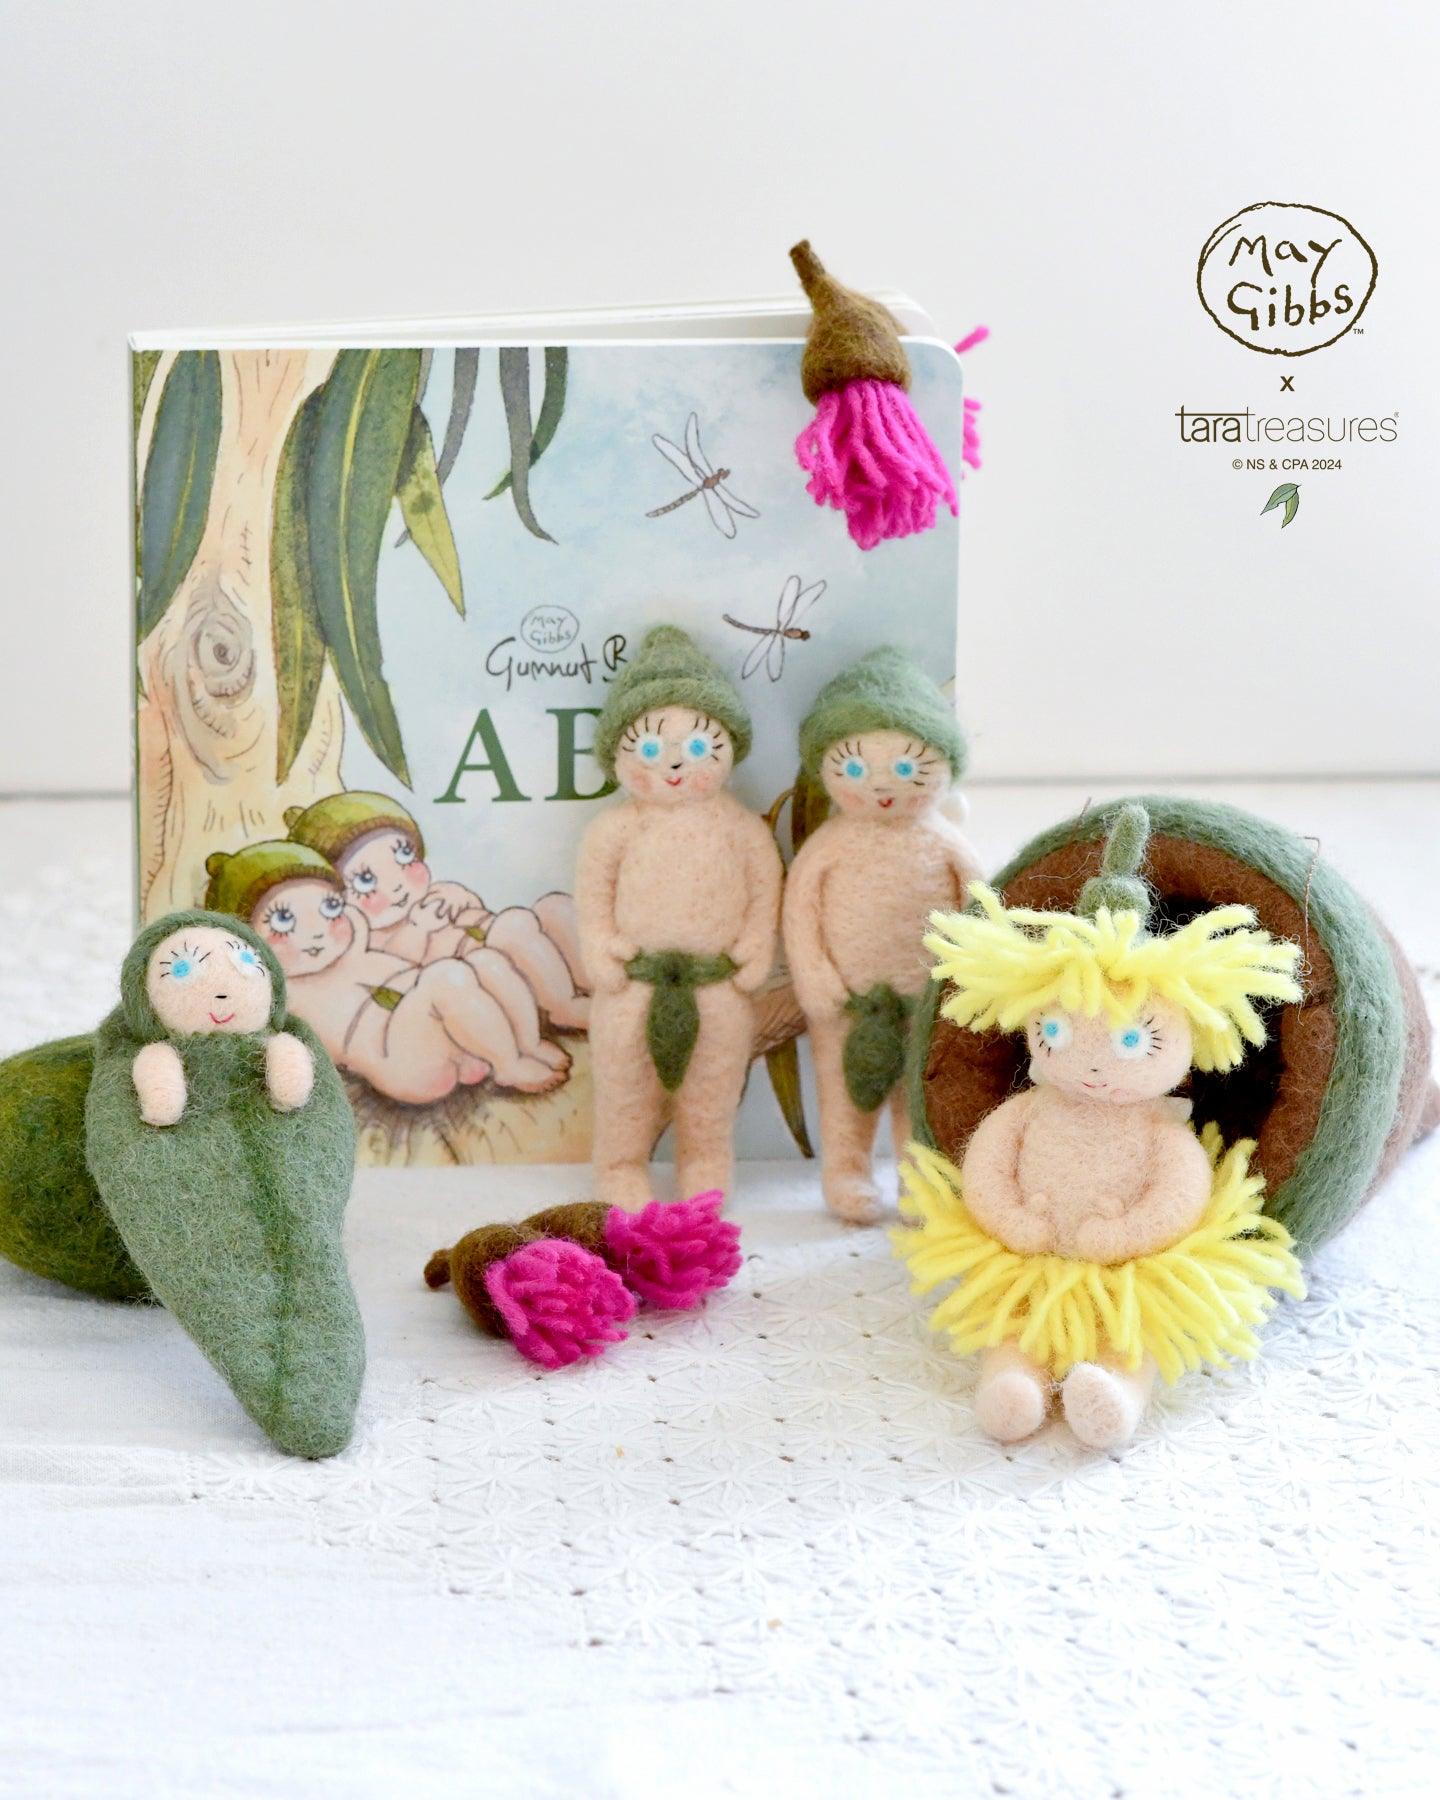 May Gibbs x Tara Treasures - Little Ragged Blossoms Doll with Gum Pod - Tara Treasures